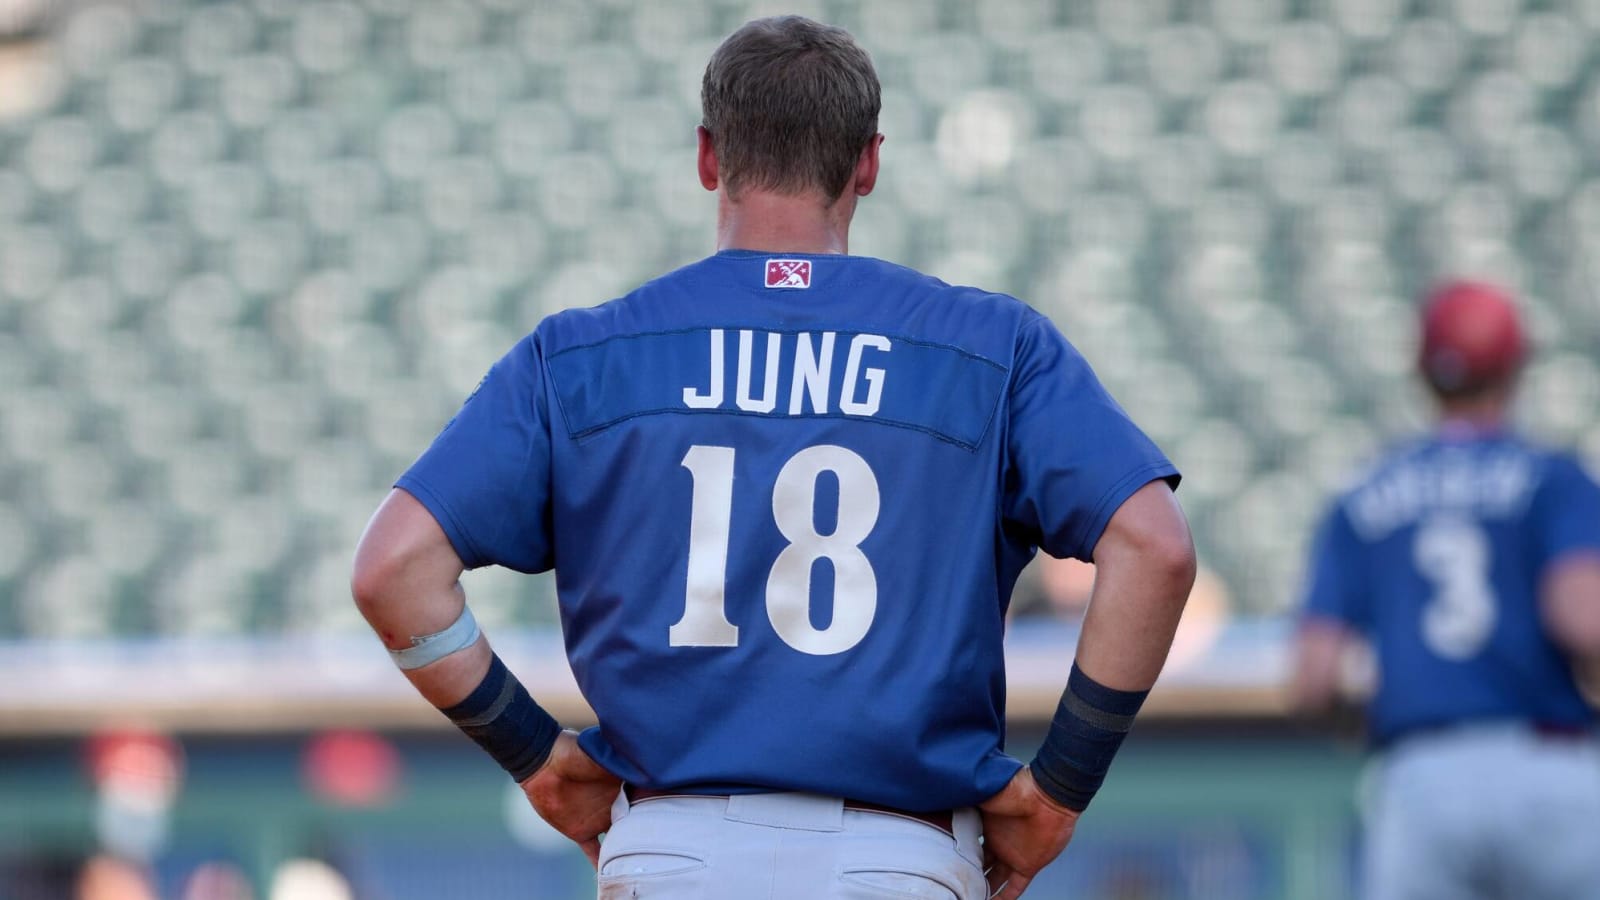 Rangers top prospect Josh Jung has shoulder surgery